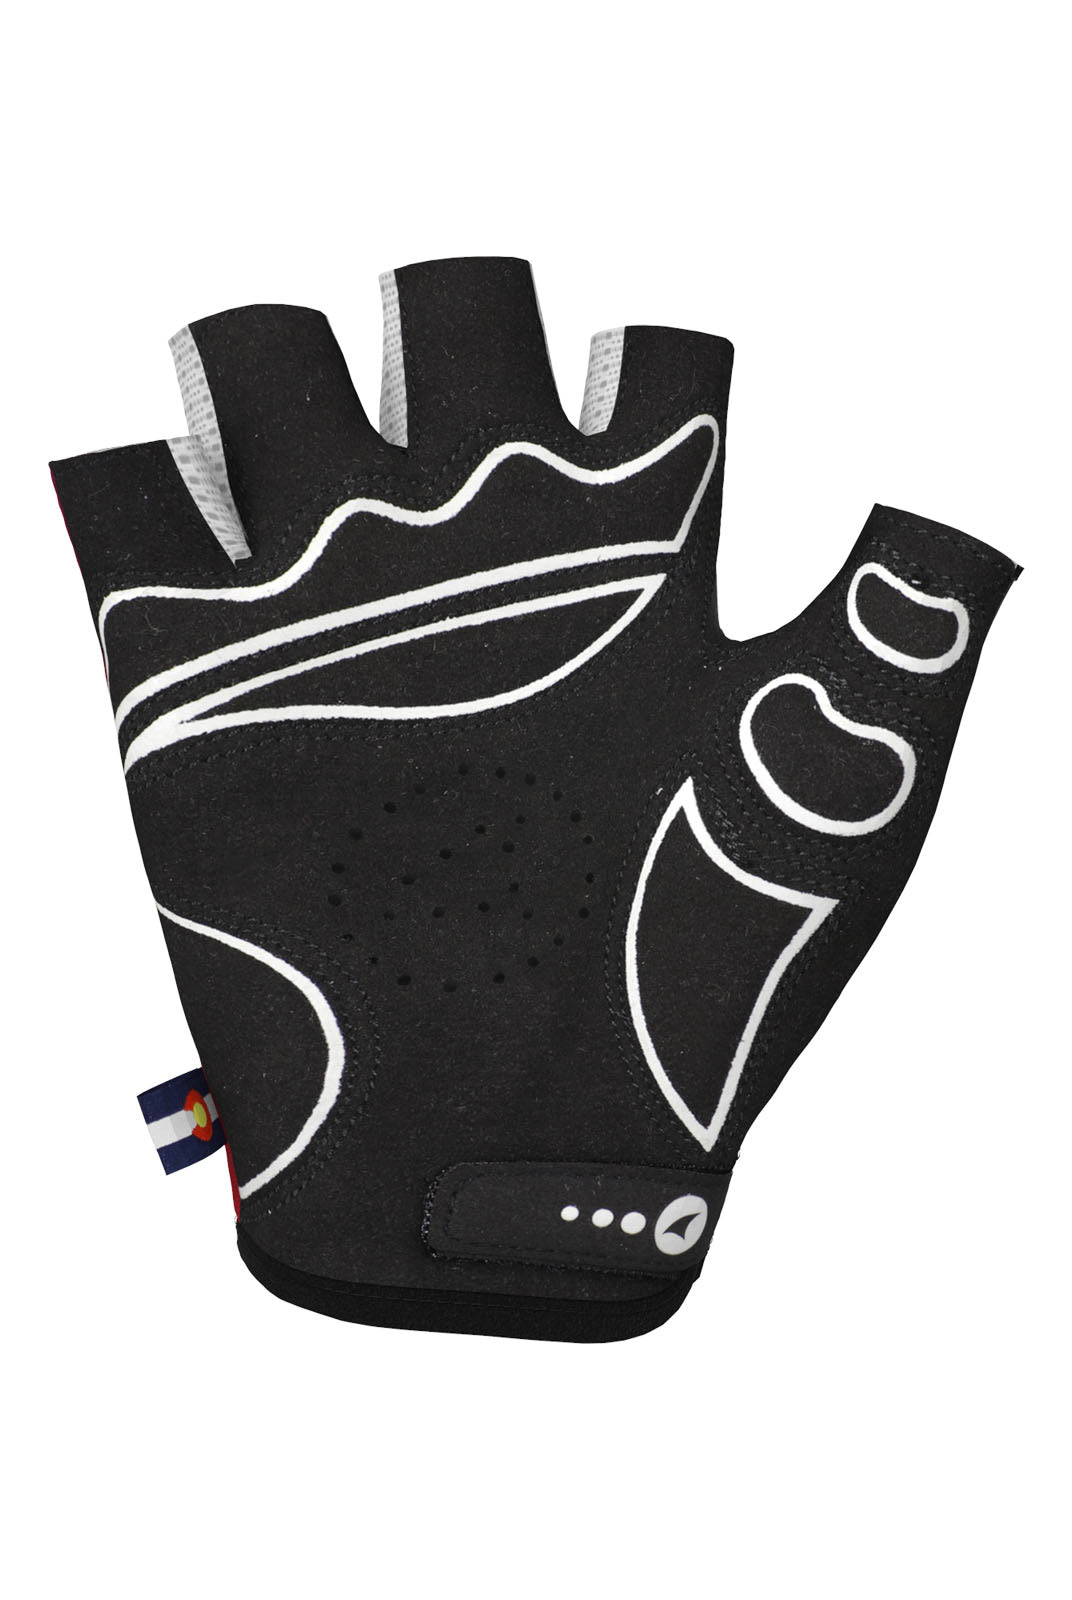 PAC Cycling Gloves - Palm Padding